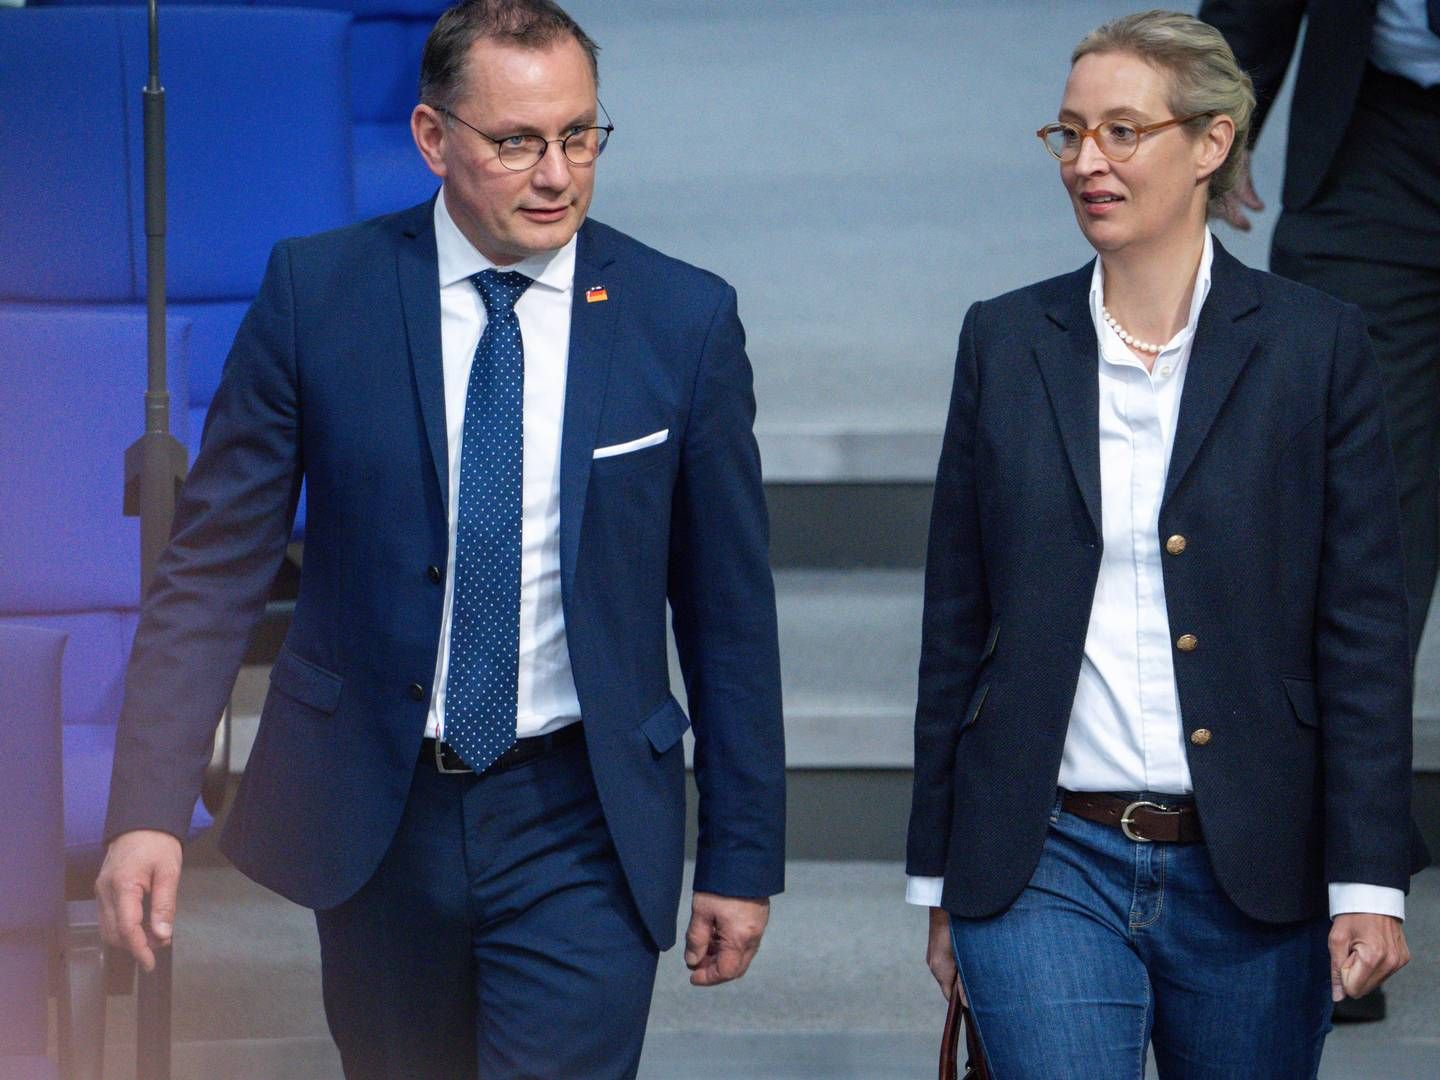 Alice Weidel und Tino Chrupalla im Bundestag | Foto: picture alliance / Flashpic | Jens Krick